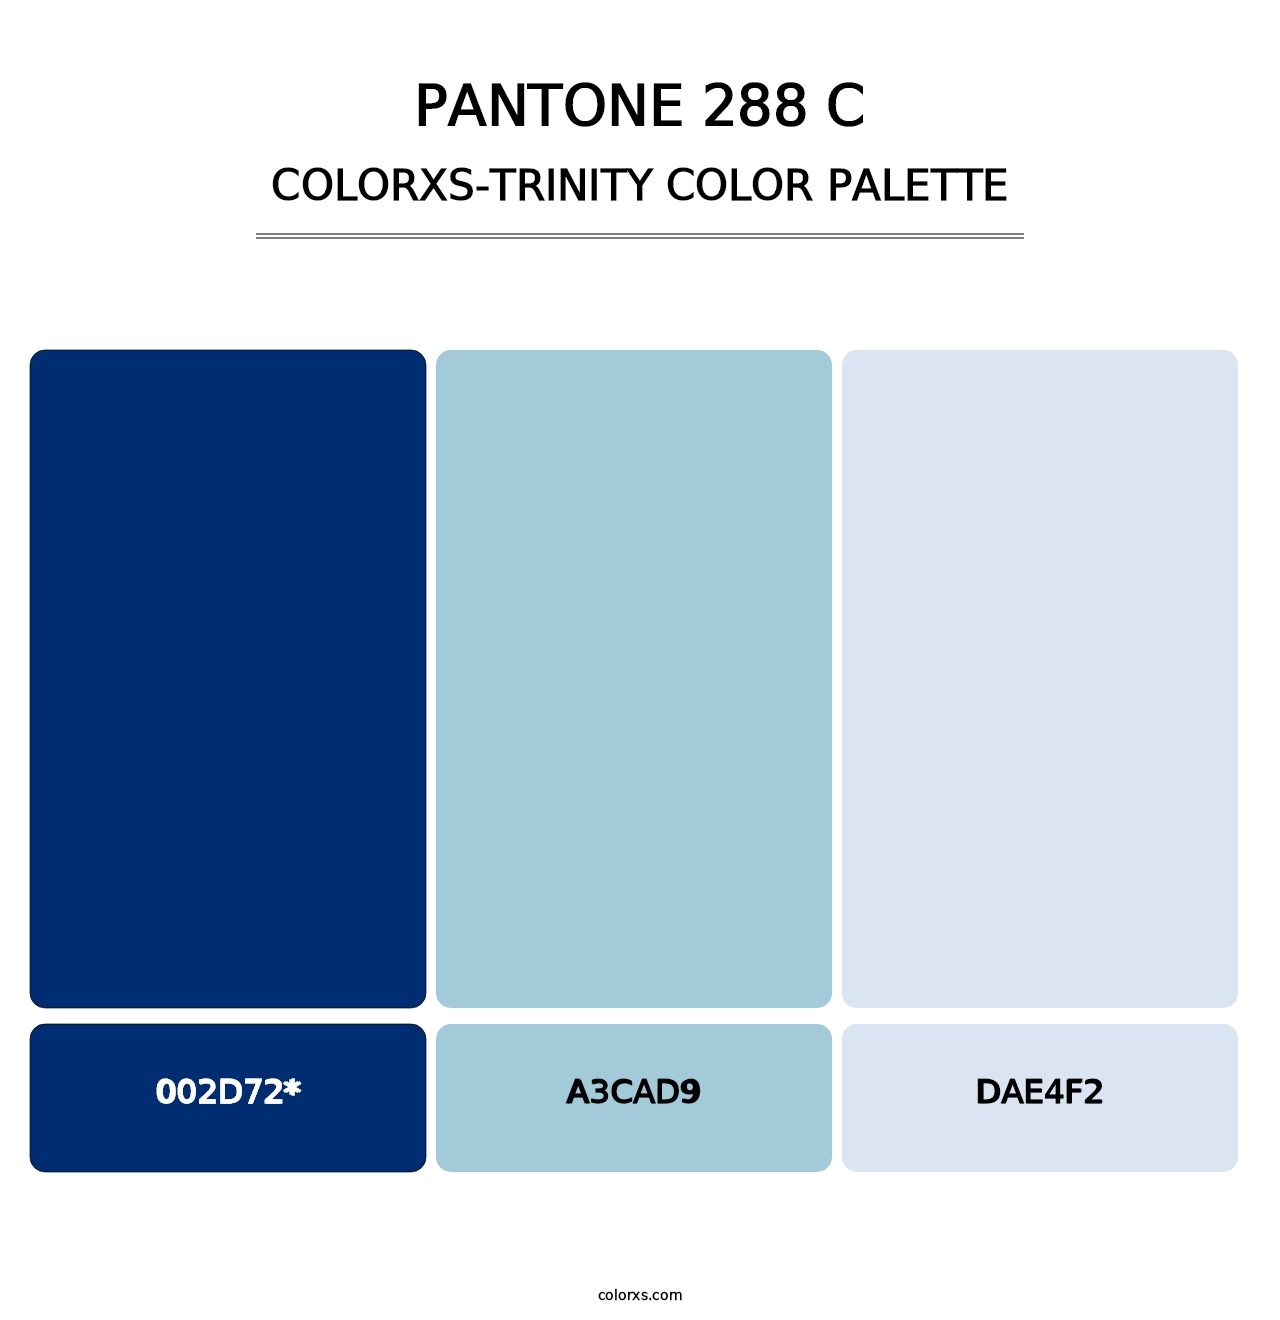 PANTONE 288 C - Colorxs Trinity Palette